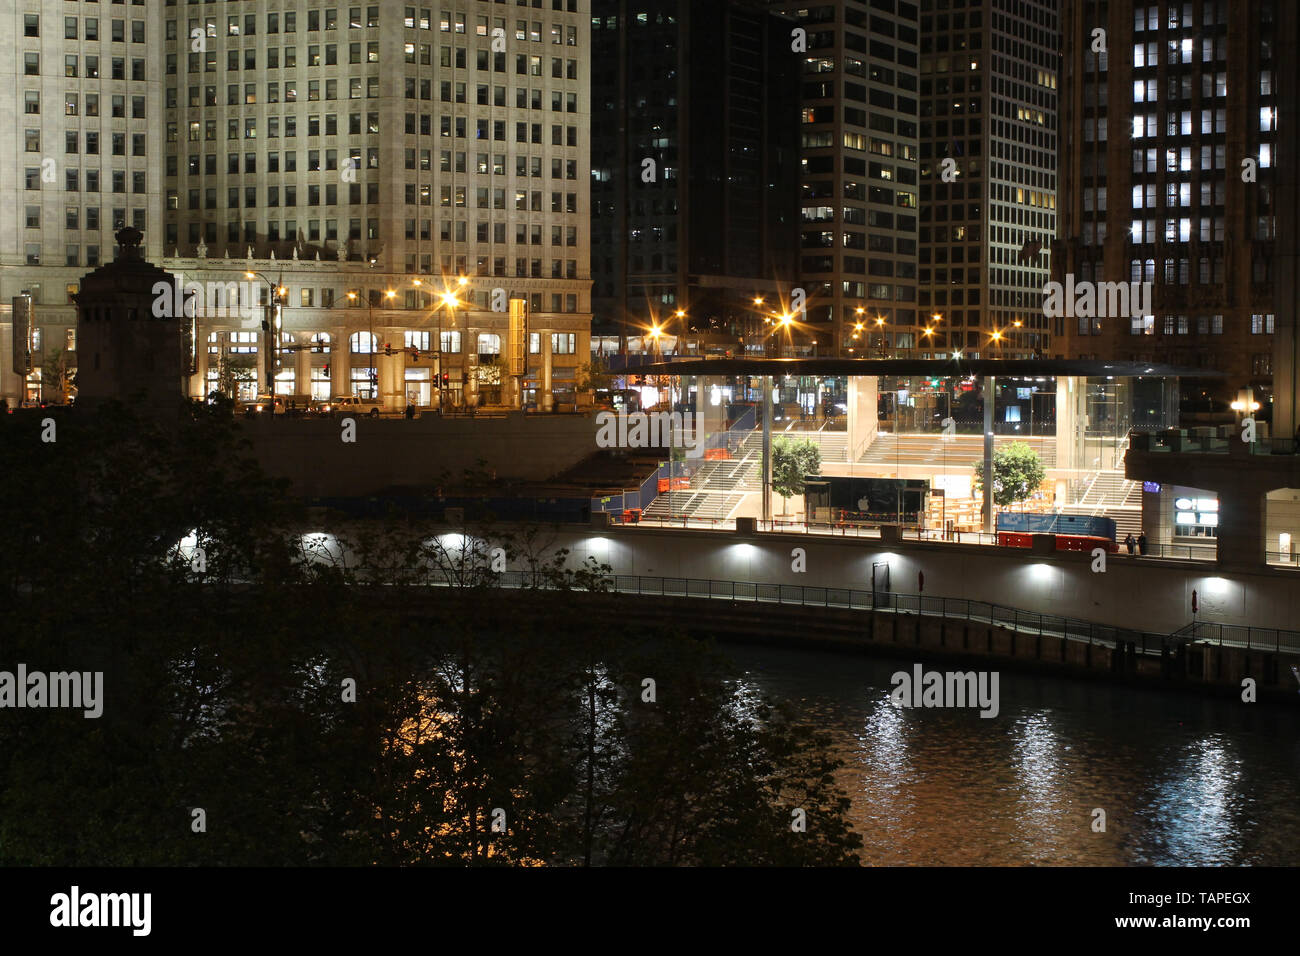 File:Apple store, Michigan Avenue, Chicago at night (49713654127).jpg -  Wikimedia Commons